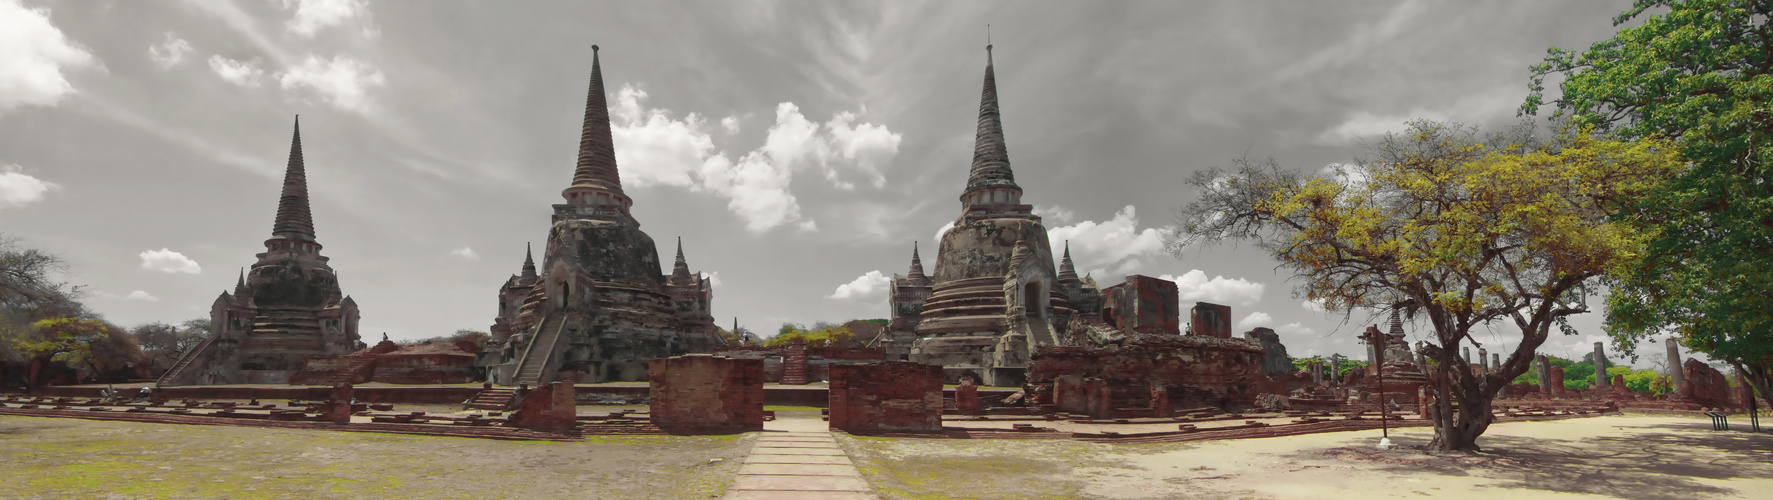 Wat Phra Si San Phet     ©